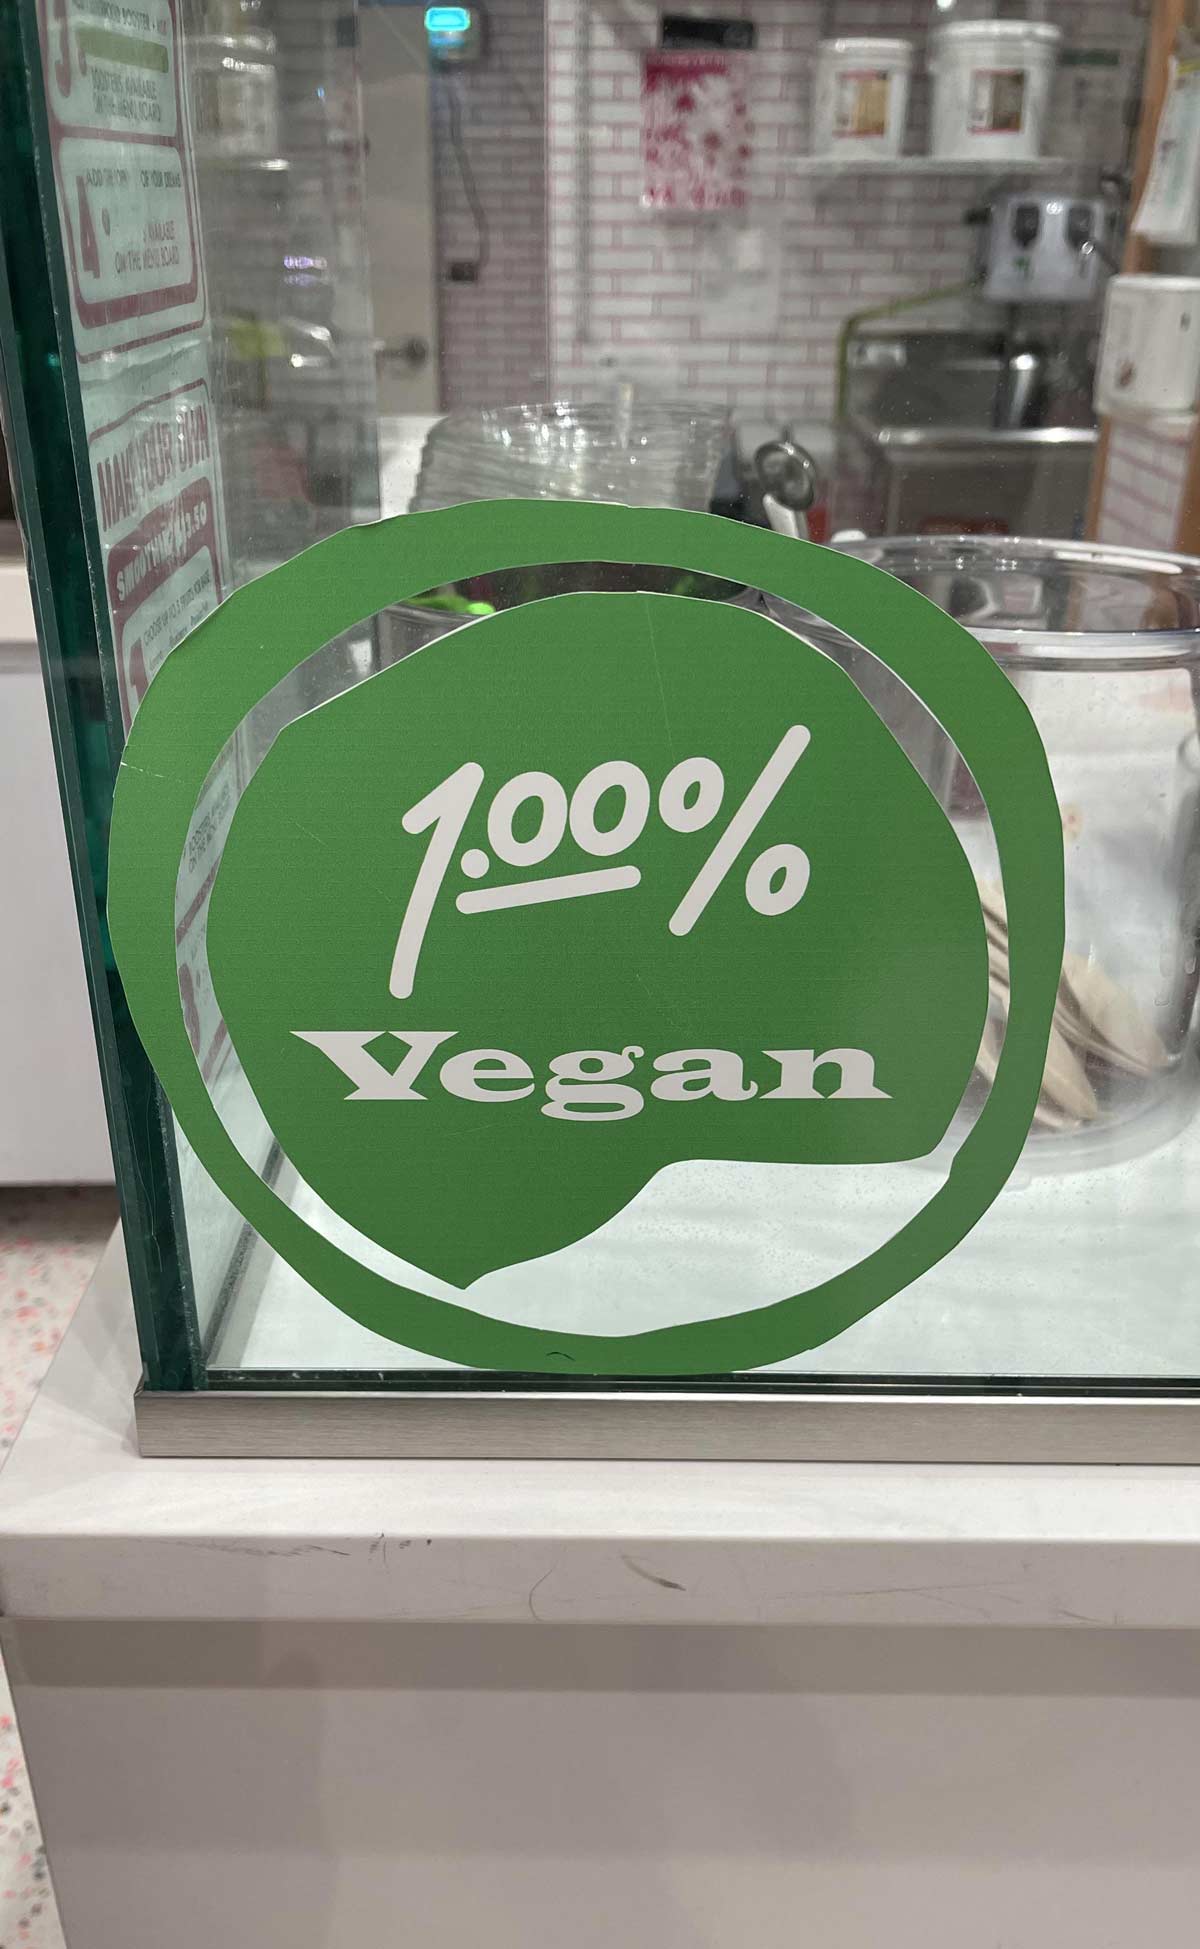 So... 99% not vegan?